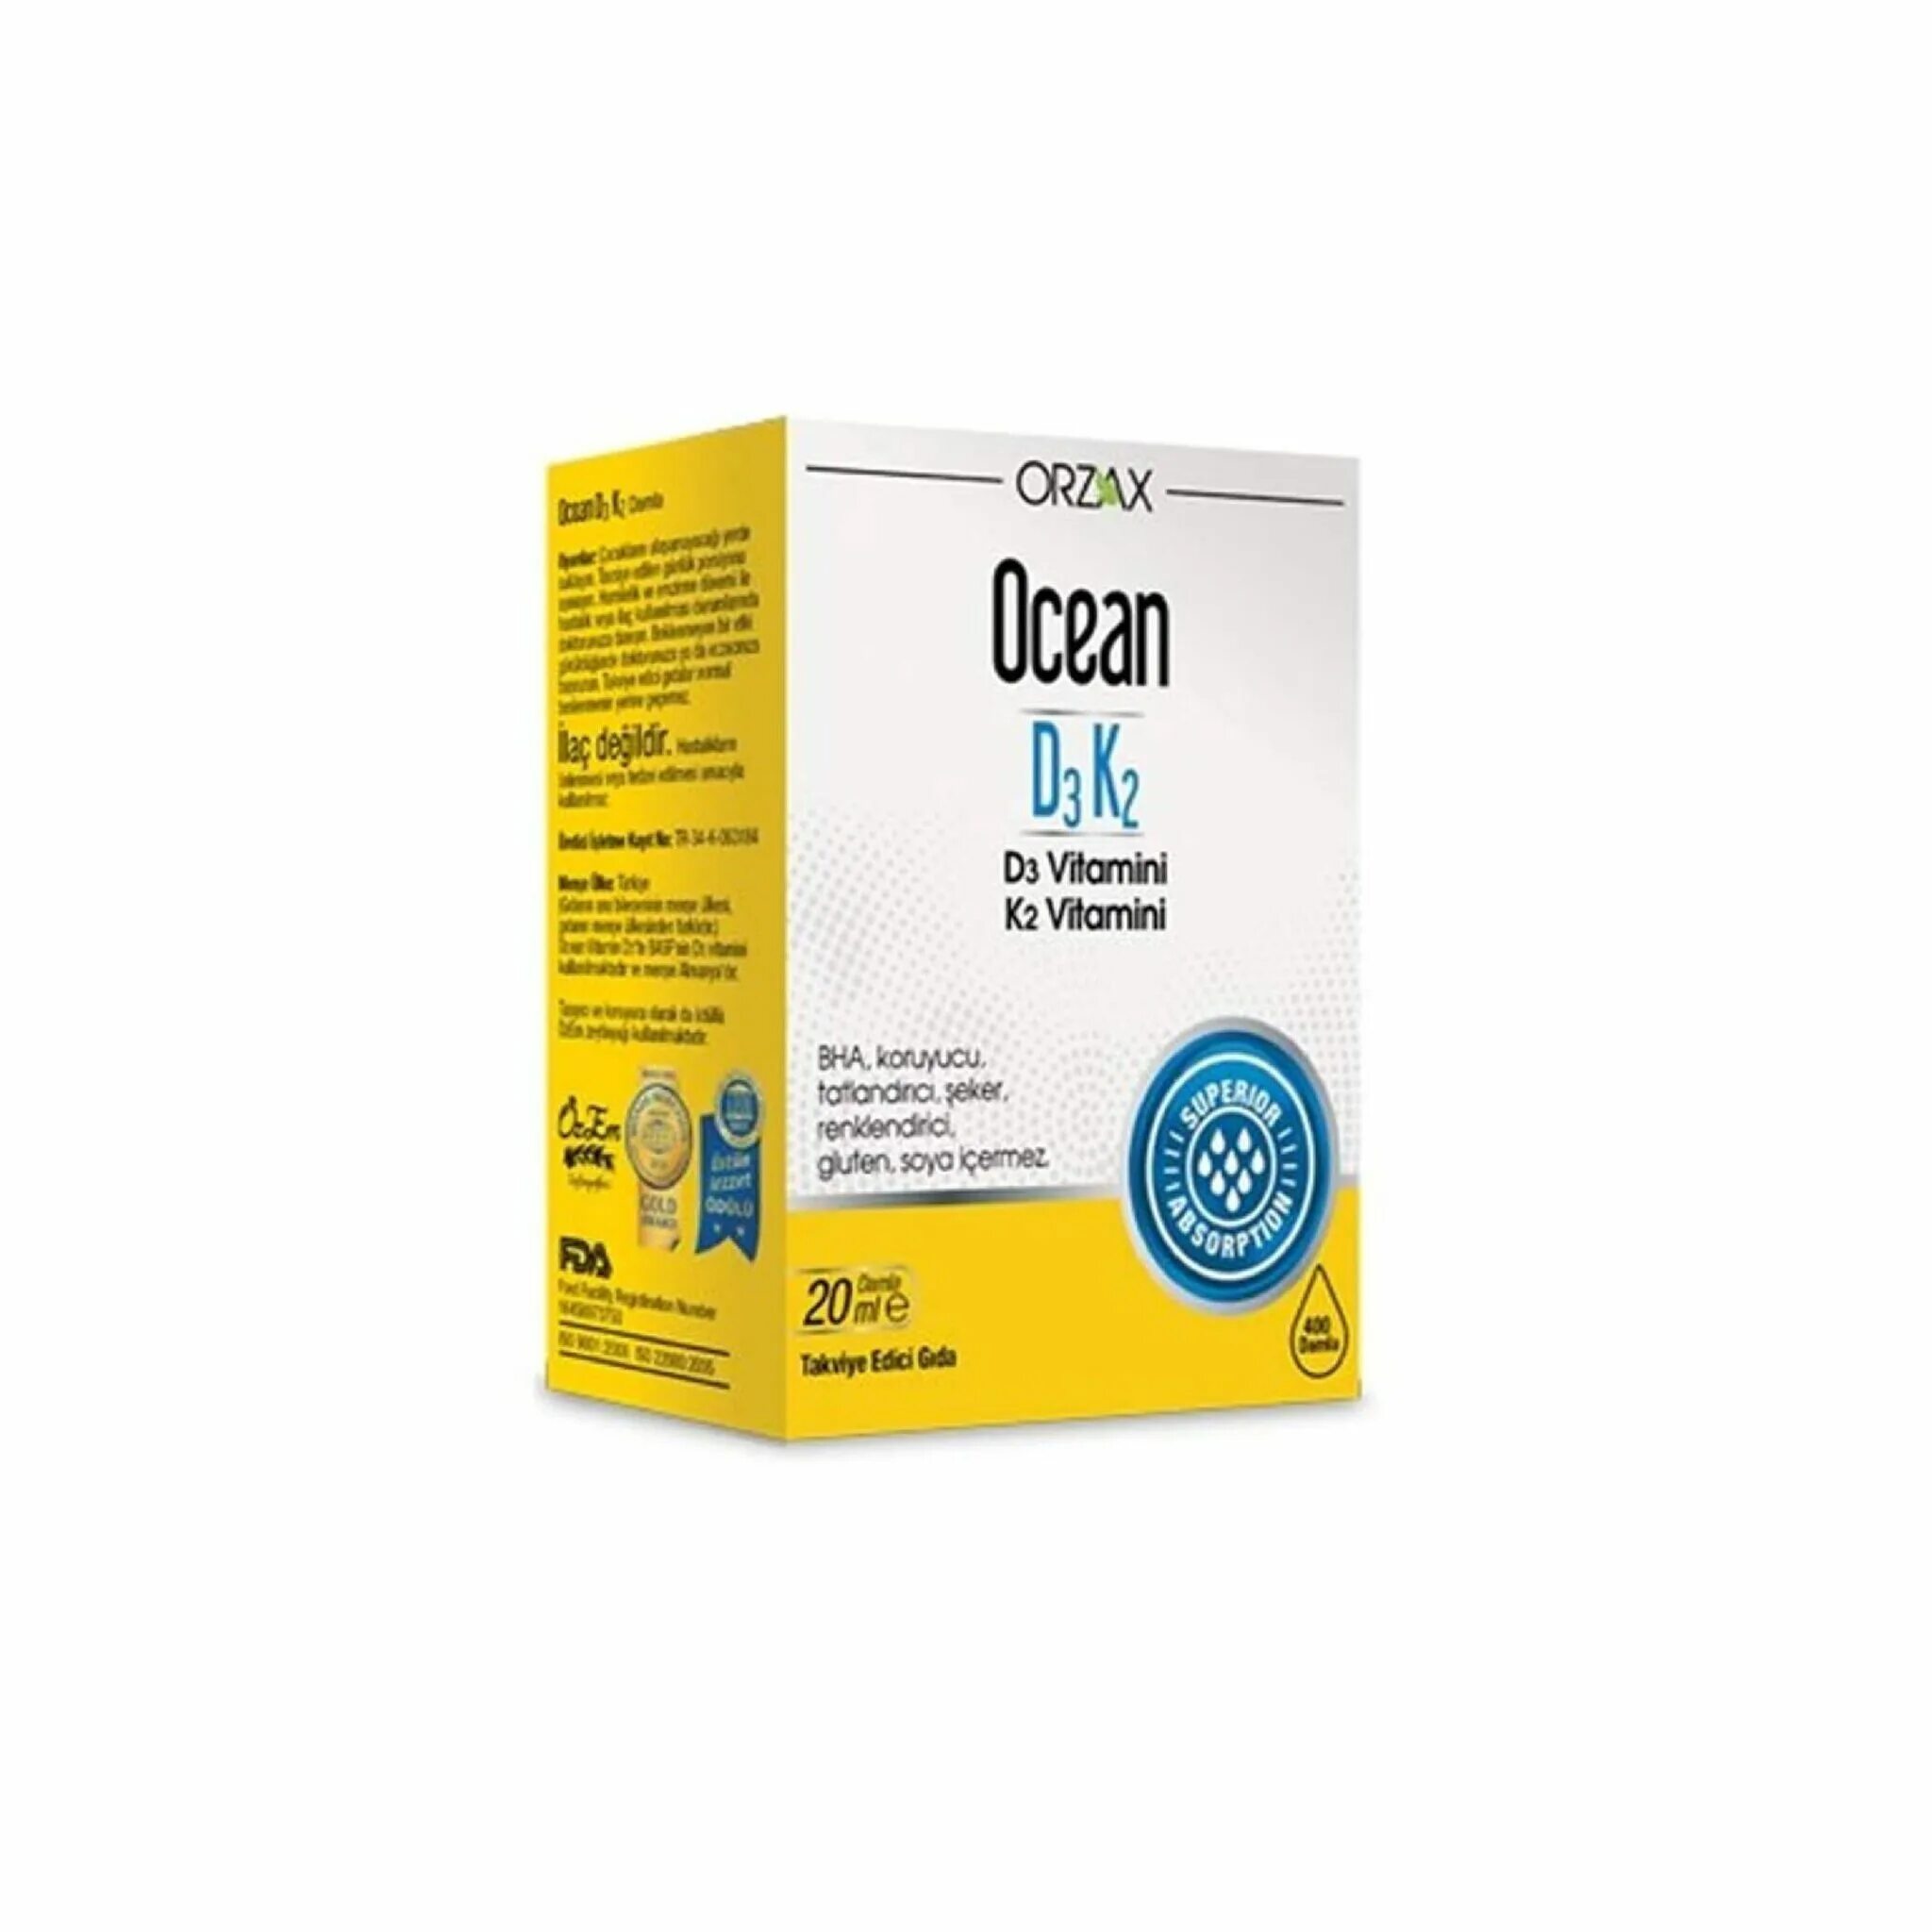 Ocean d3 + k2, 20мл Orzax. Ocean Vitamin d3 400. Ocean Vitamin d3 1000 IU. Витамины Orzax Ocean Vitamin d3.